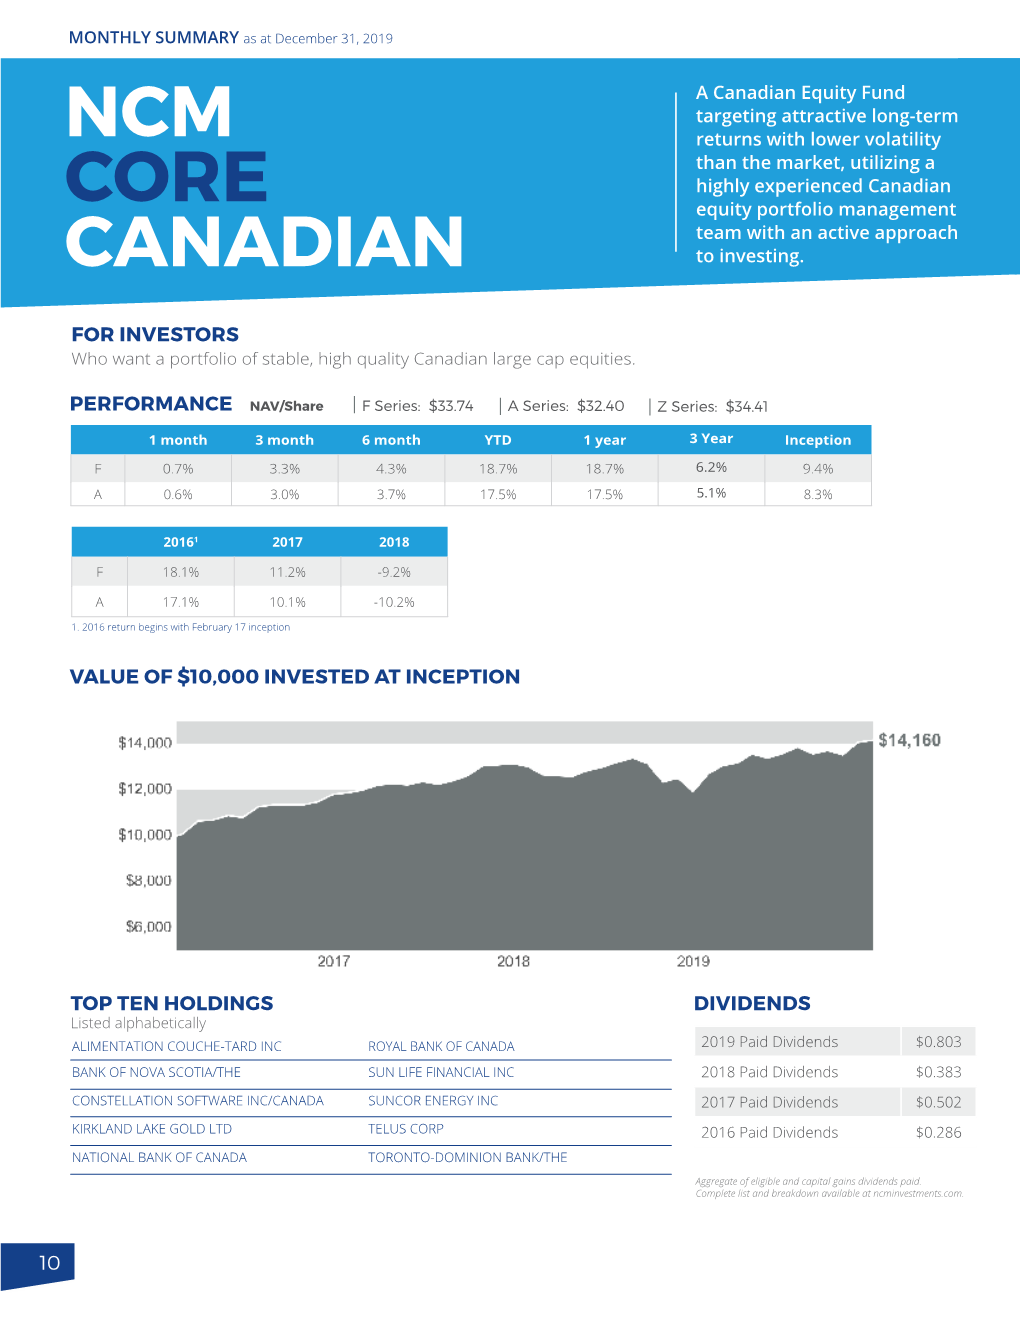 NCM Core Canadian 14.7X 17.4% 2.9% 0.79 Custodian CIBC Mellon Trust S&P/ TSX TRI 16.3X 13.7% 3.0% 1.00 Company